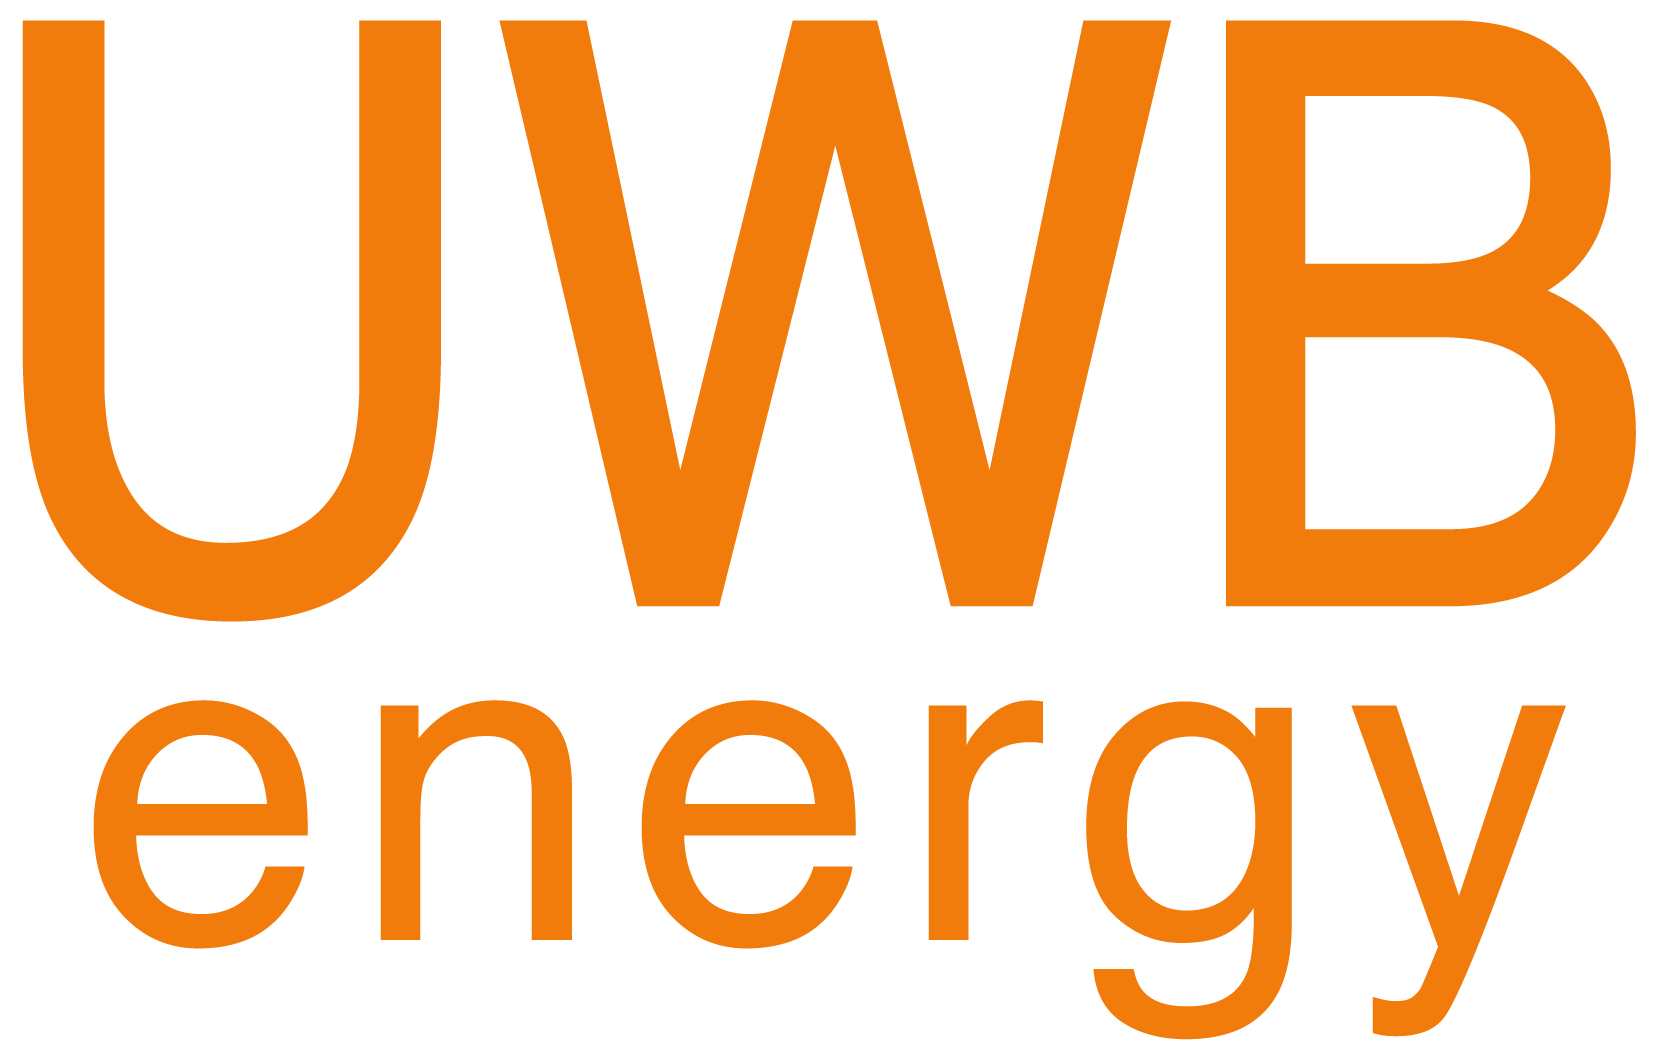 UWB Energy